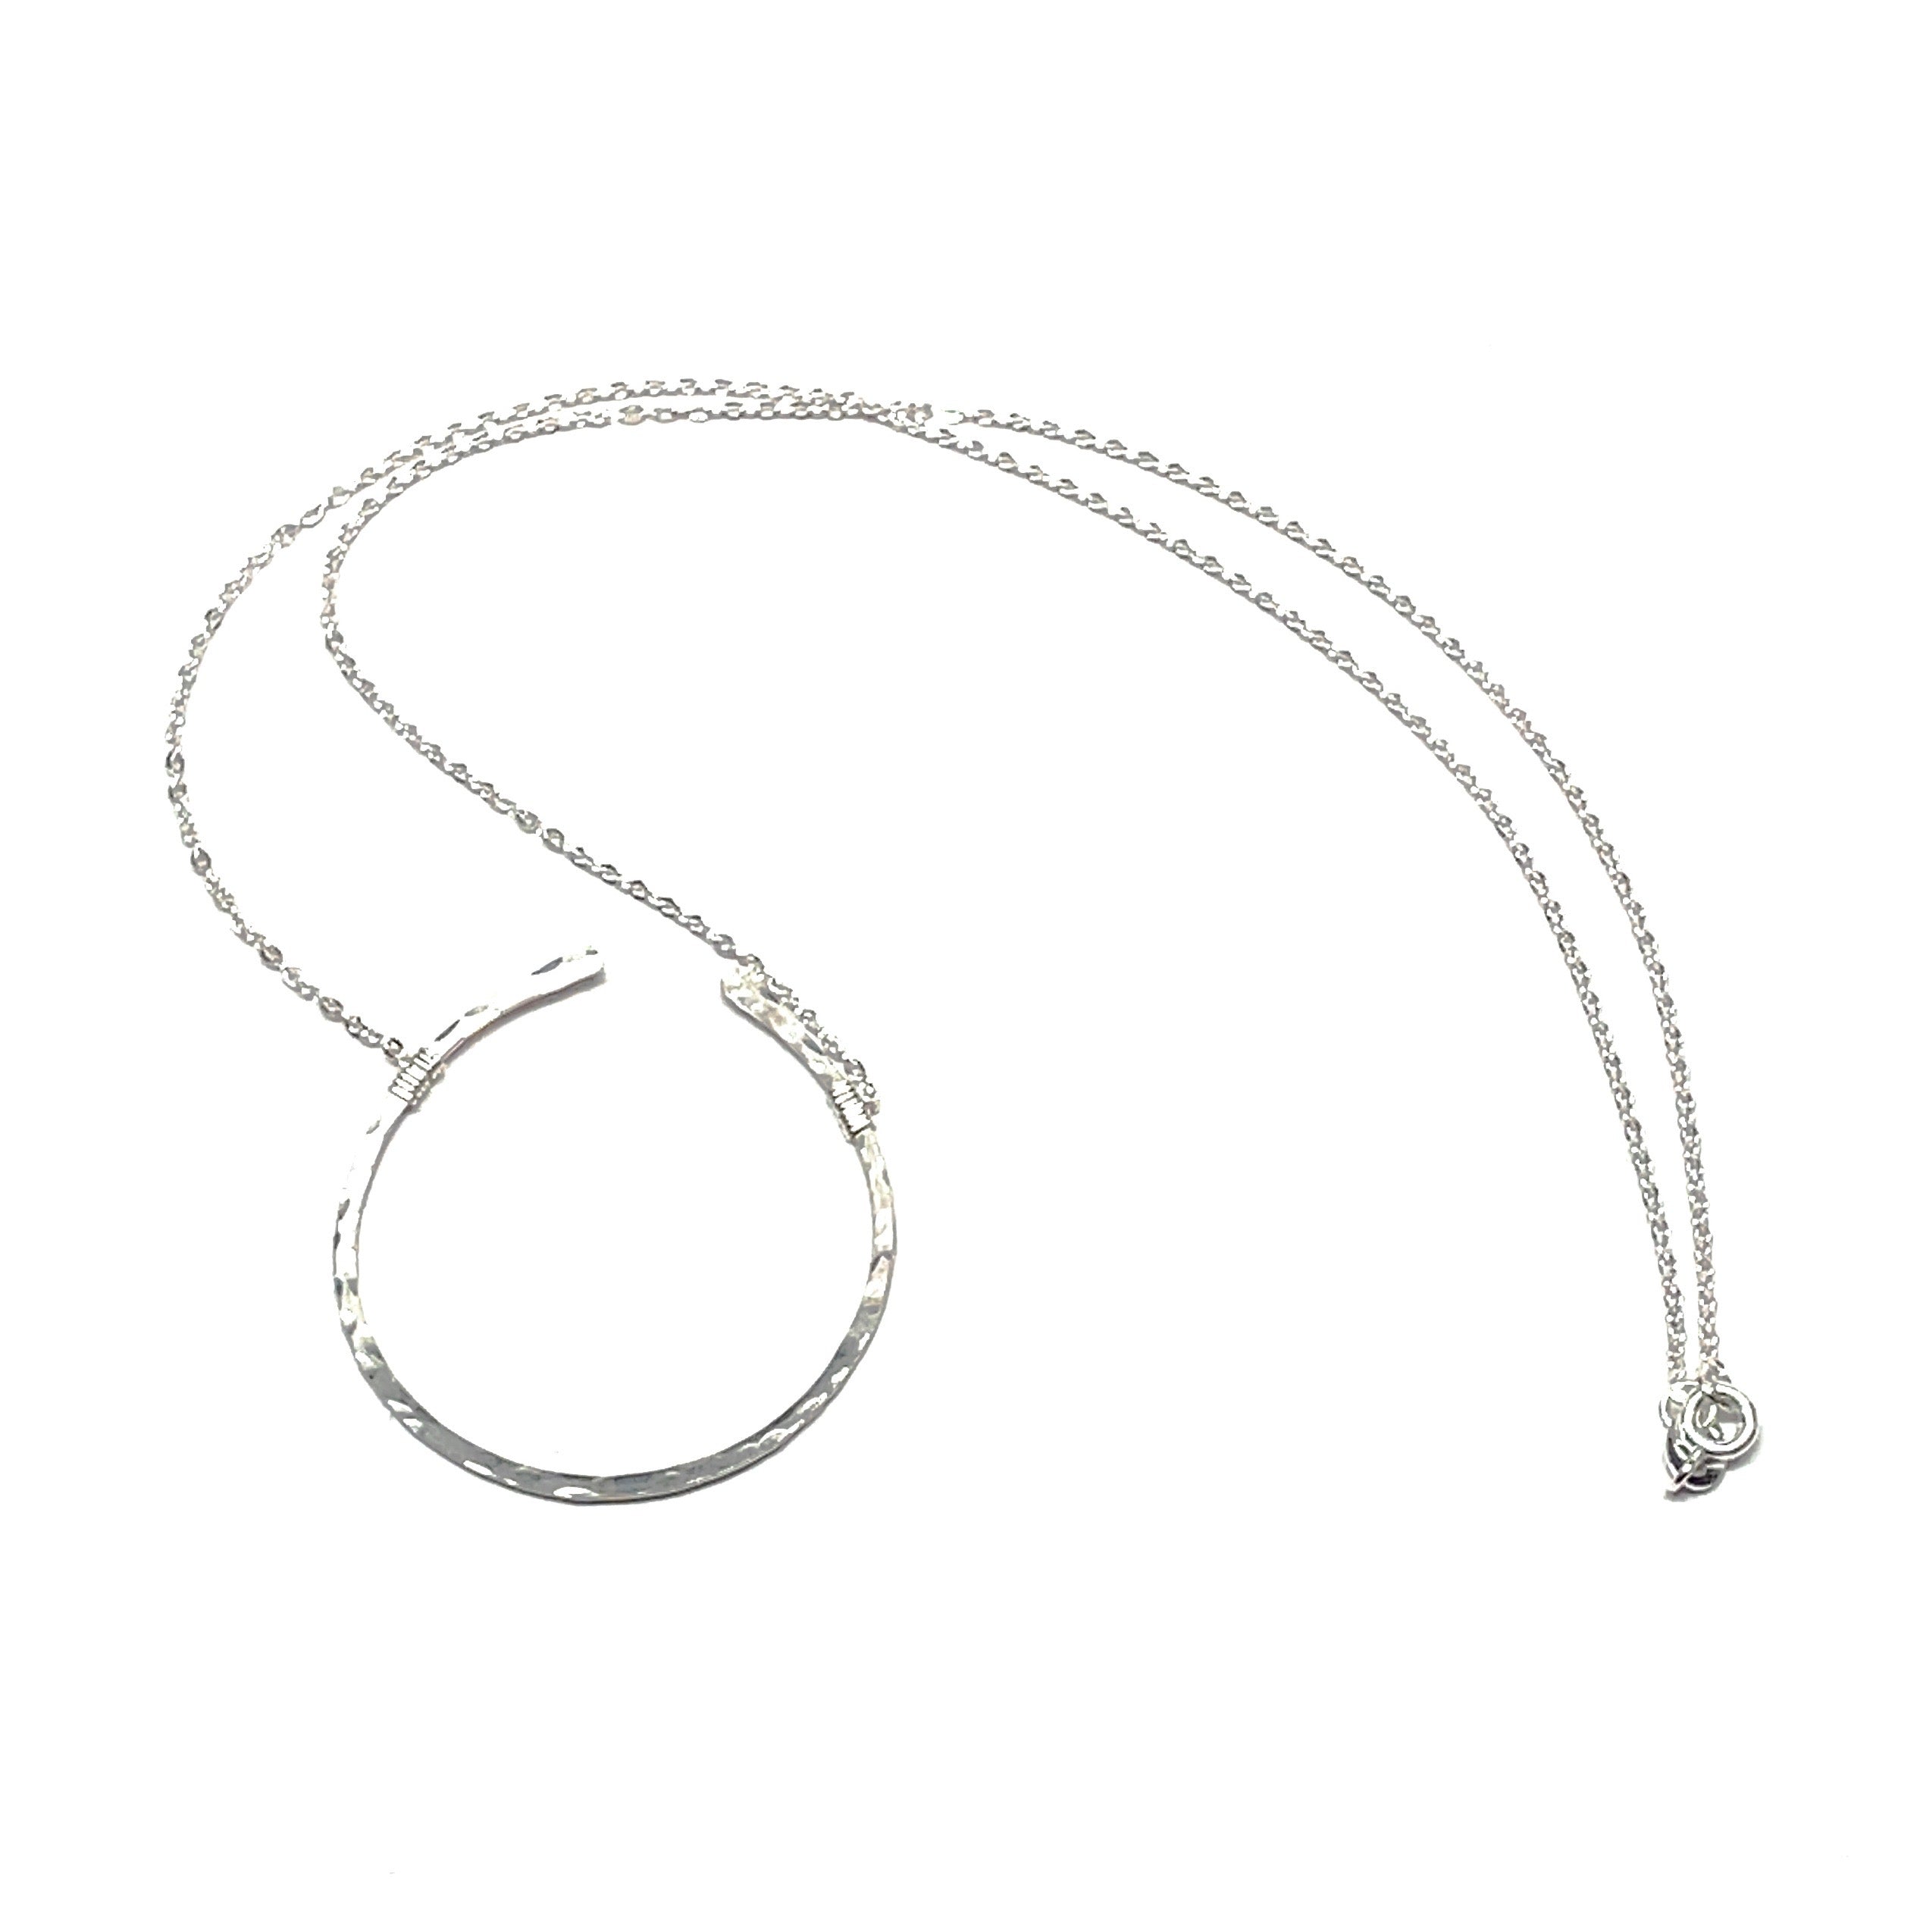 Modern equestrian silver necklace